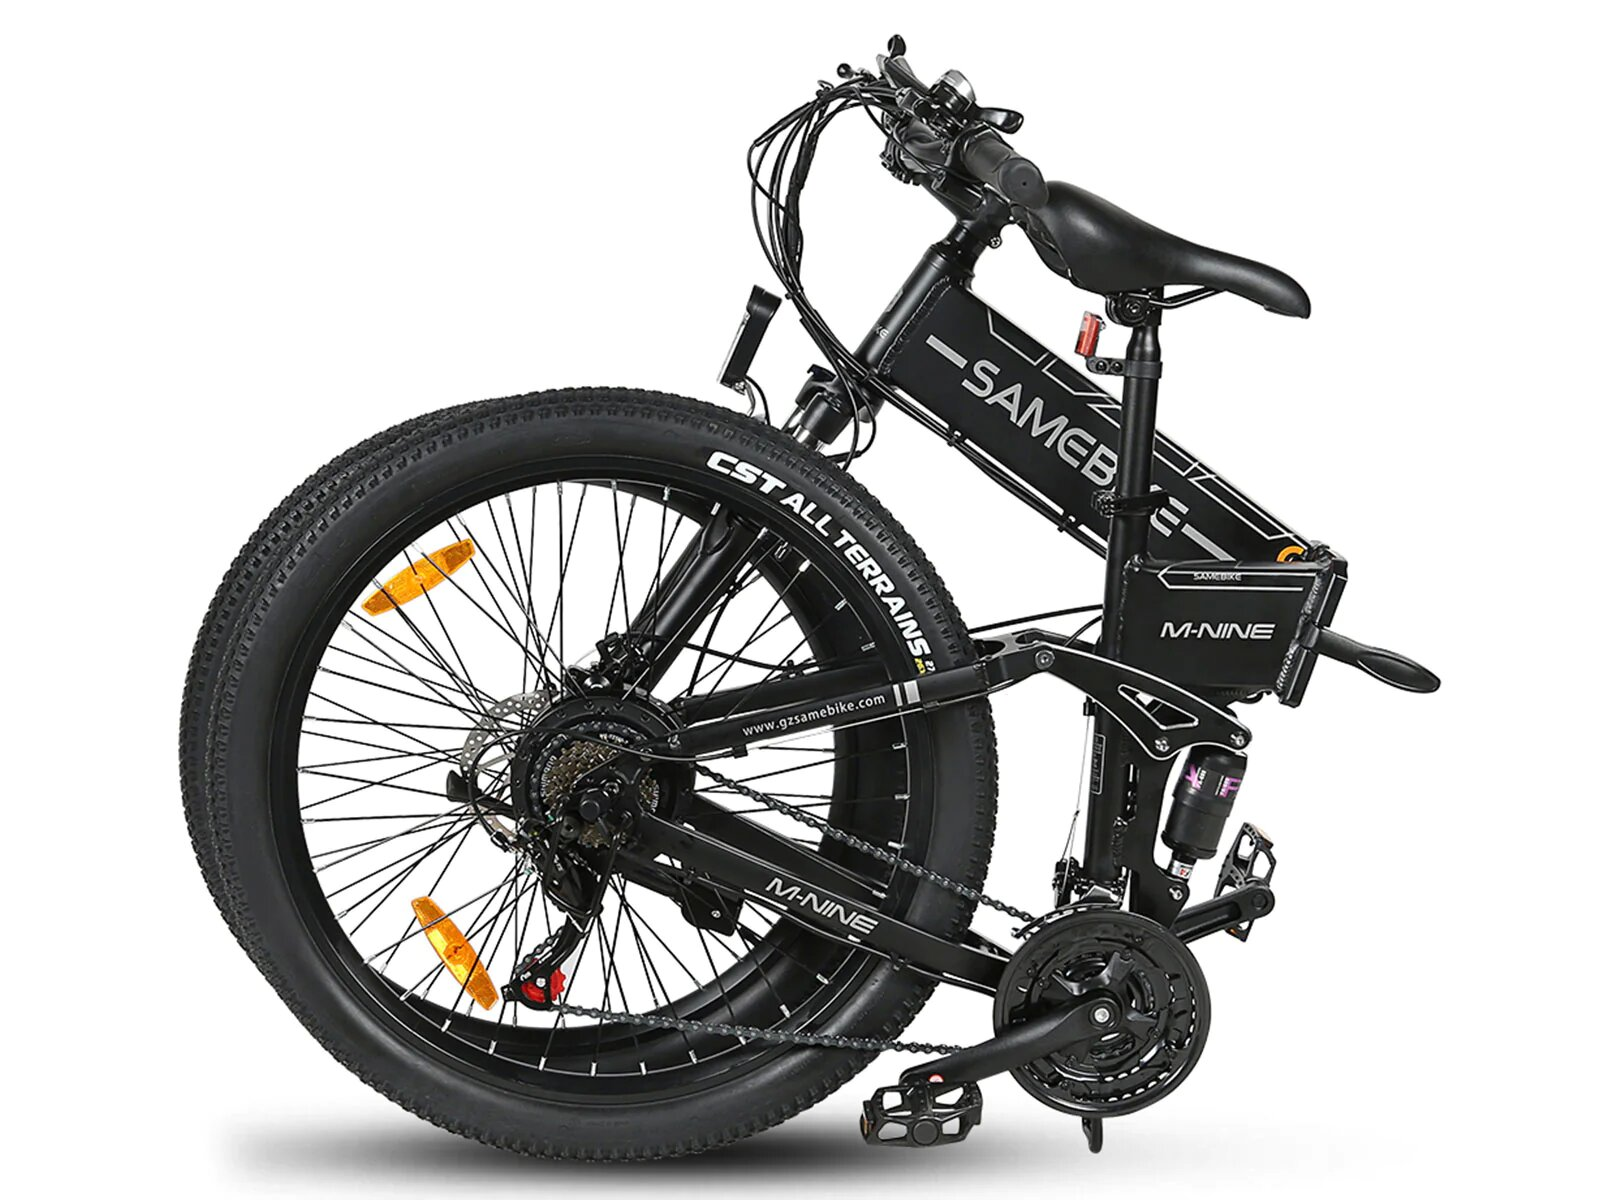 SAMEBIKE E-BIKE All Terrain Unisex-Rad, Zoll, 26 (Laufradgröße: (ATB) Schwarz) Bike